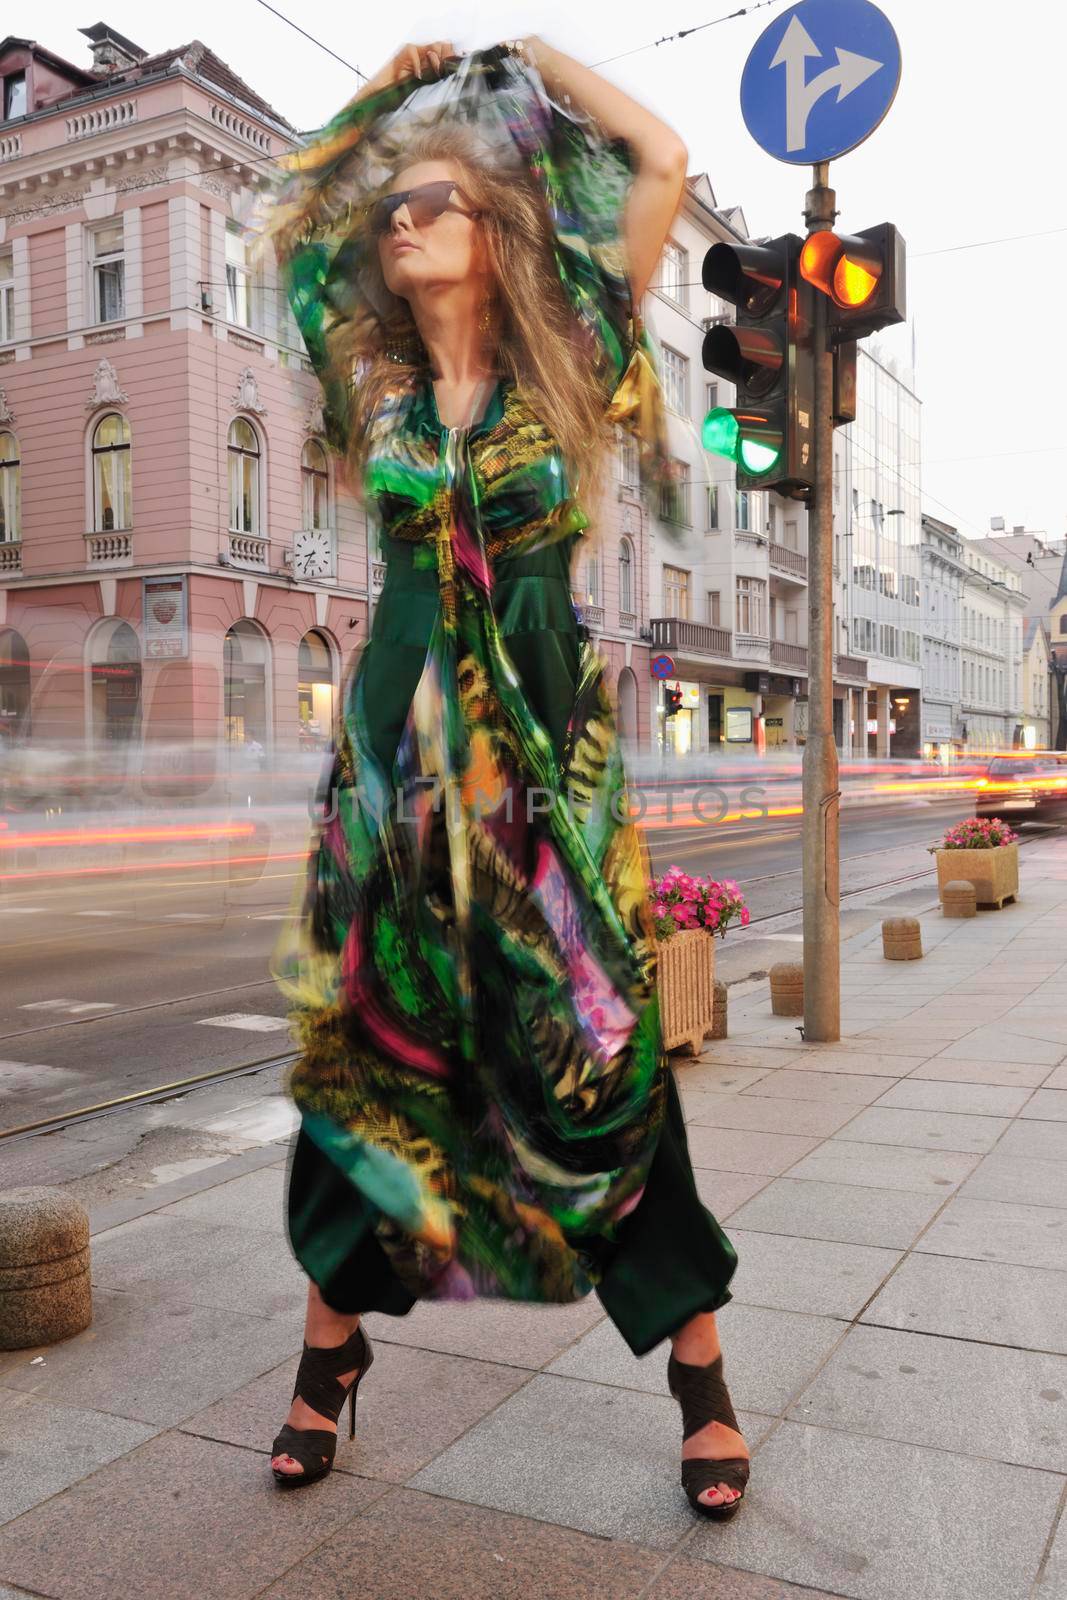 elegant woman on city street at night by dotshock